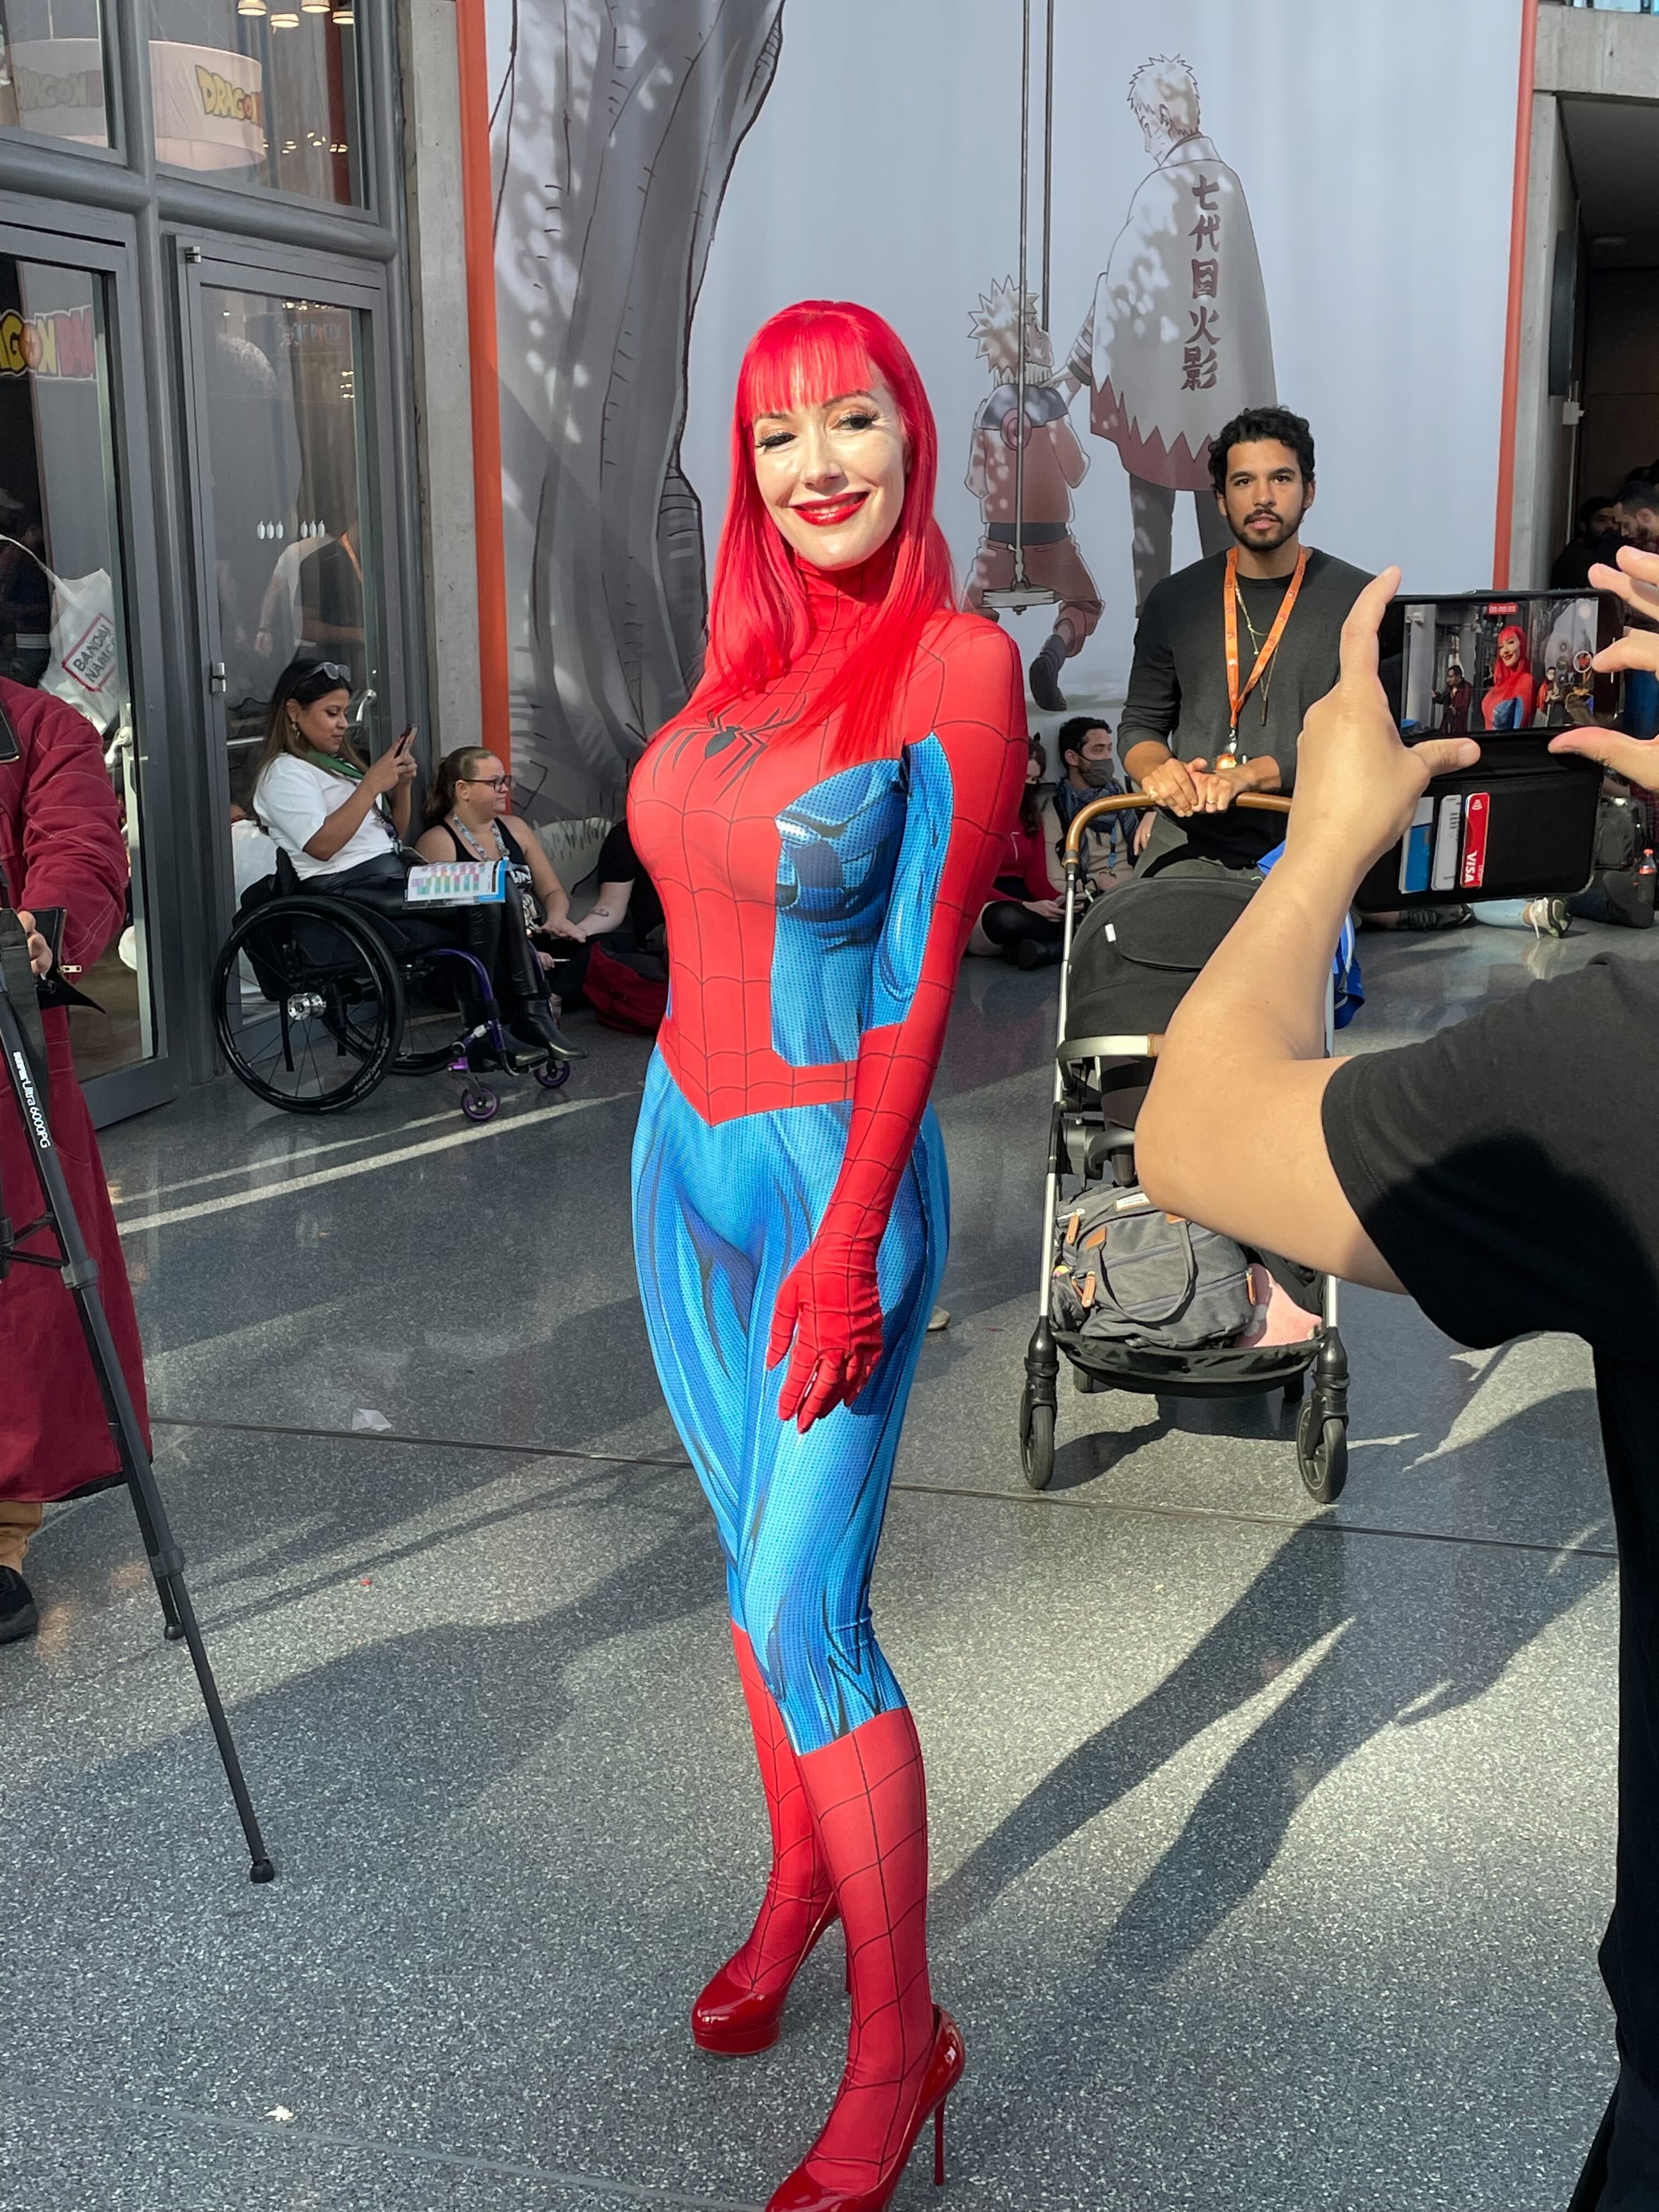 New York Comic Con Cosplay - cosplay